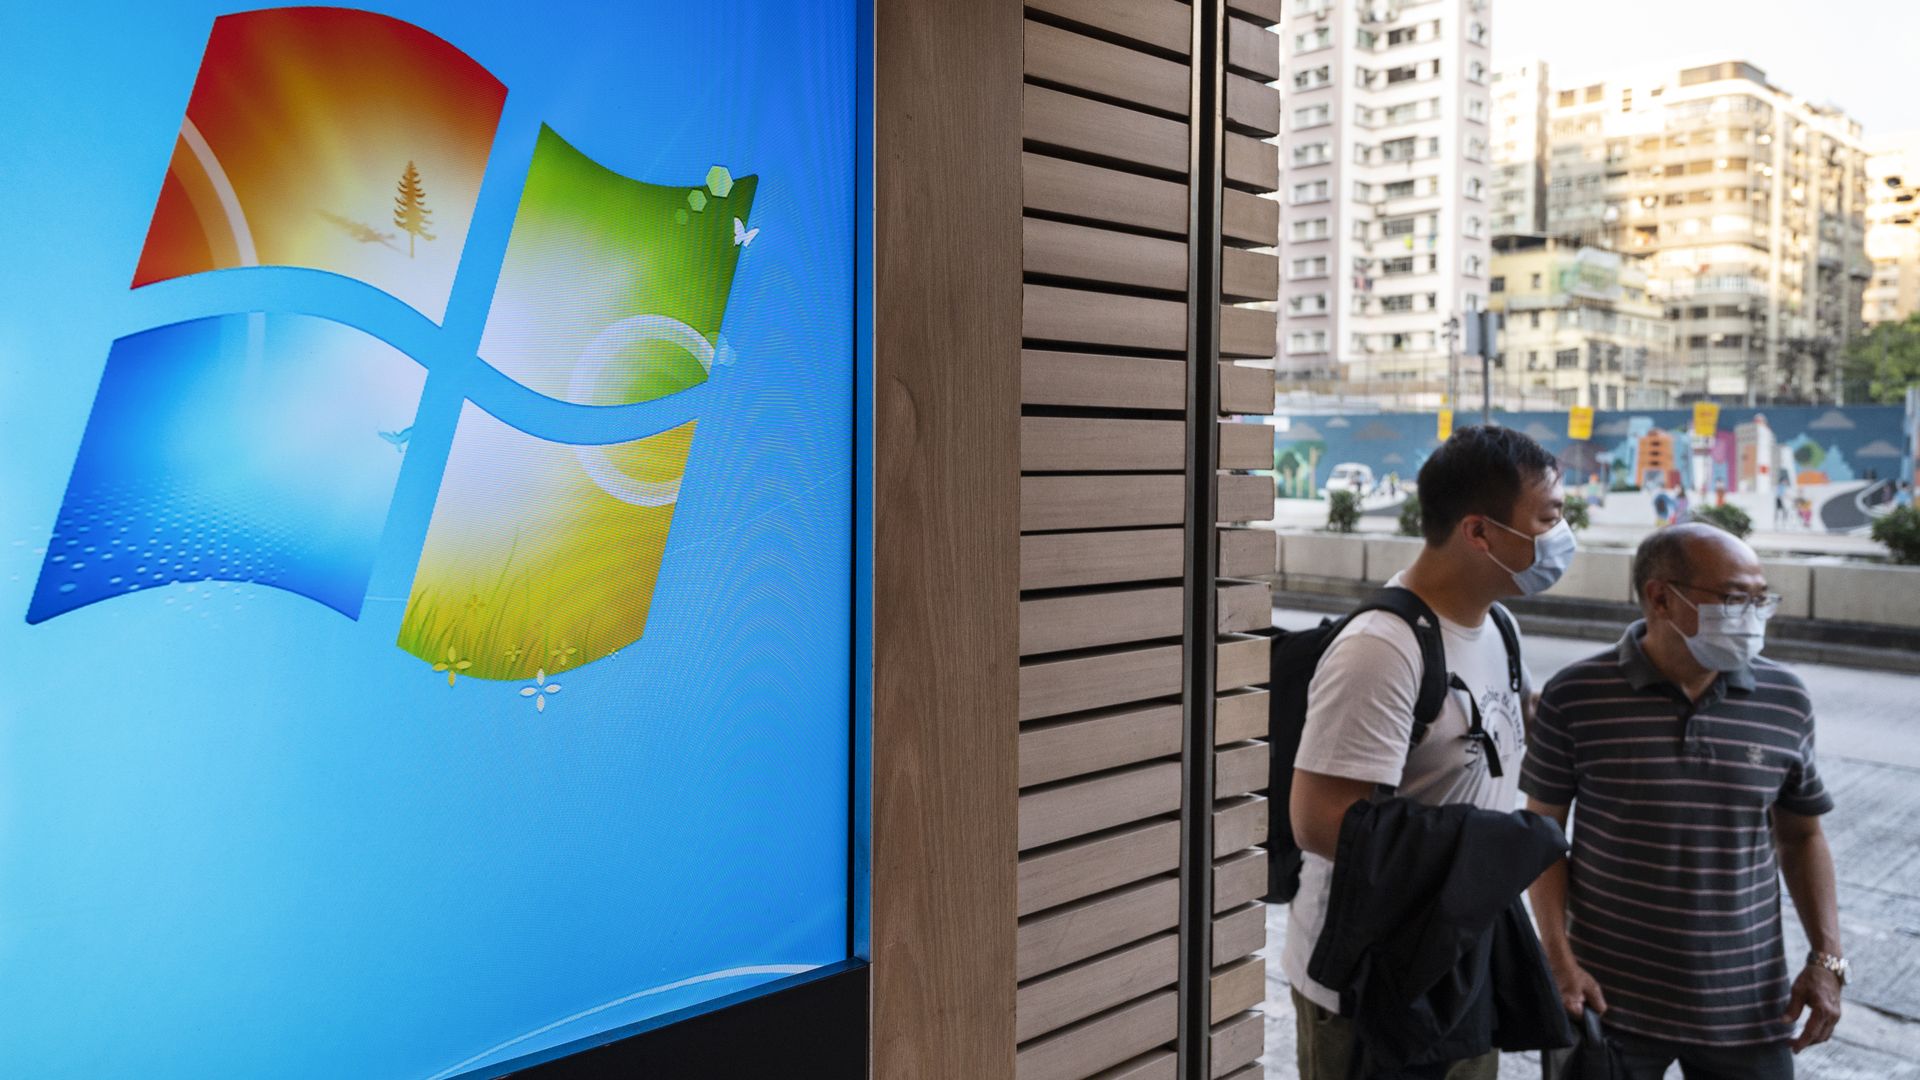 A screen displaying Microsoft's logo in Hong Kong in February 2021.